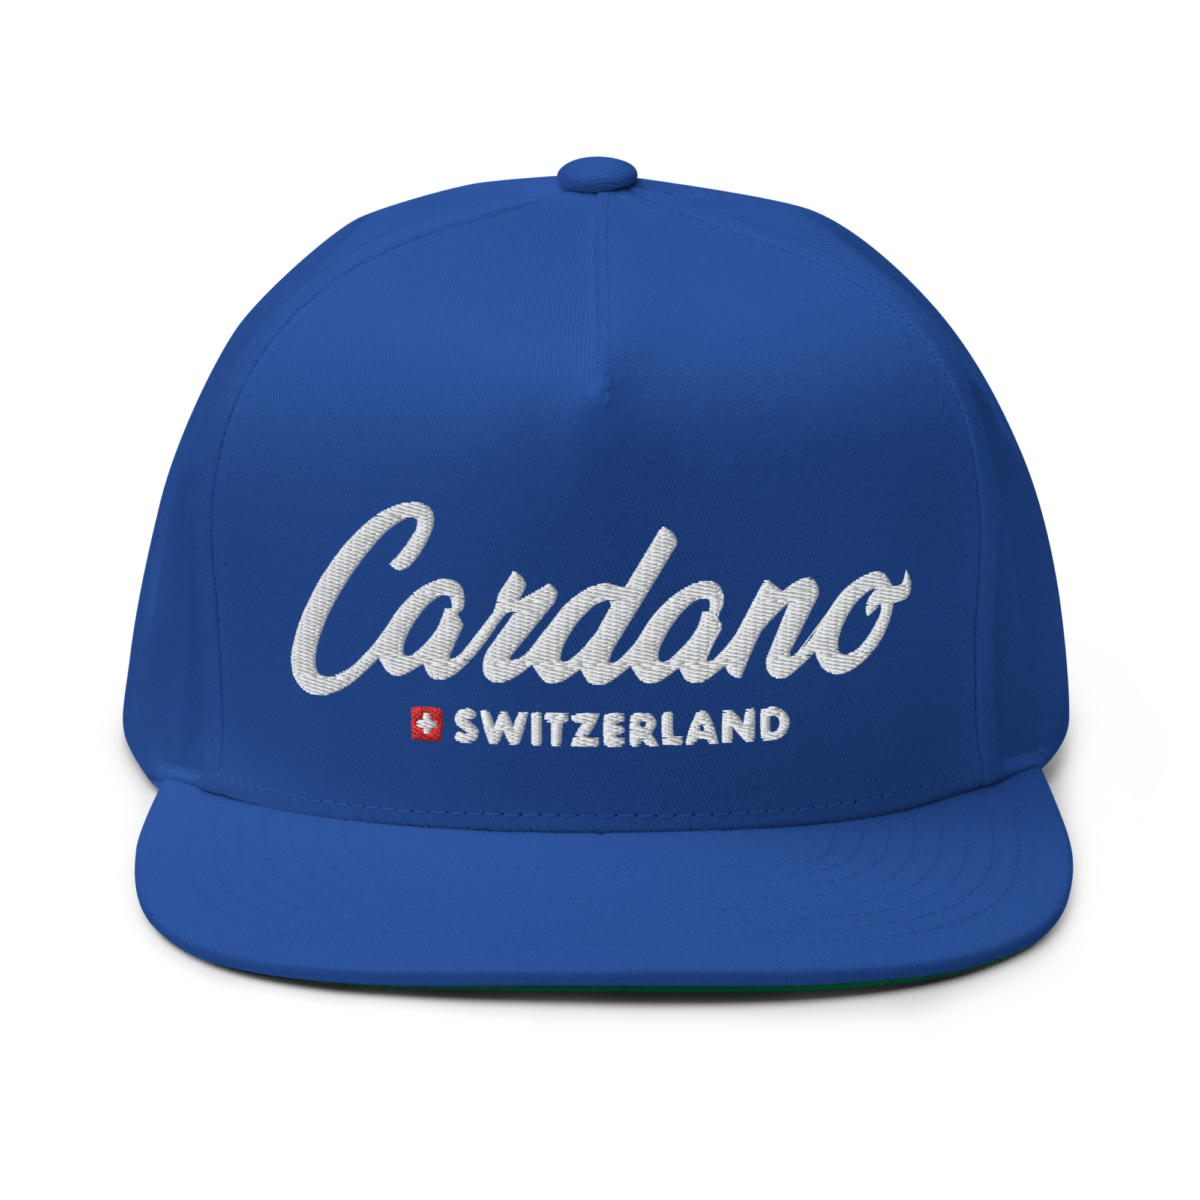 flat bill cap royal blue front 63a21ad16b192 - Cardano Switzerland Snapback Hat